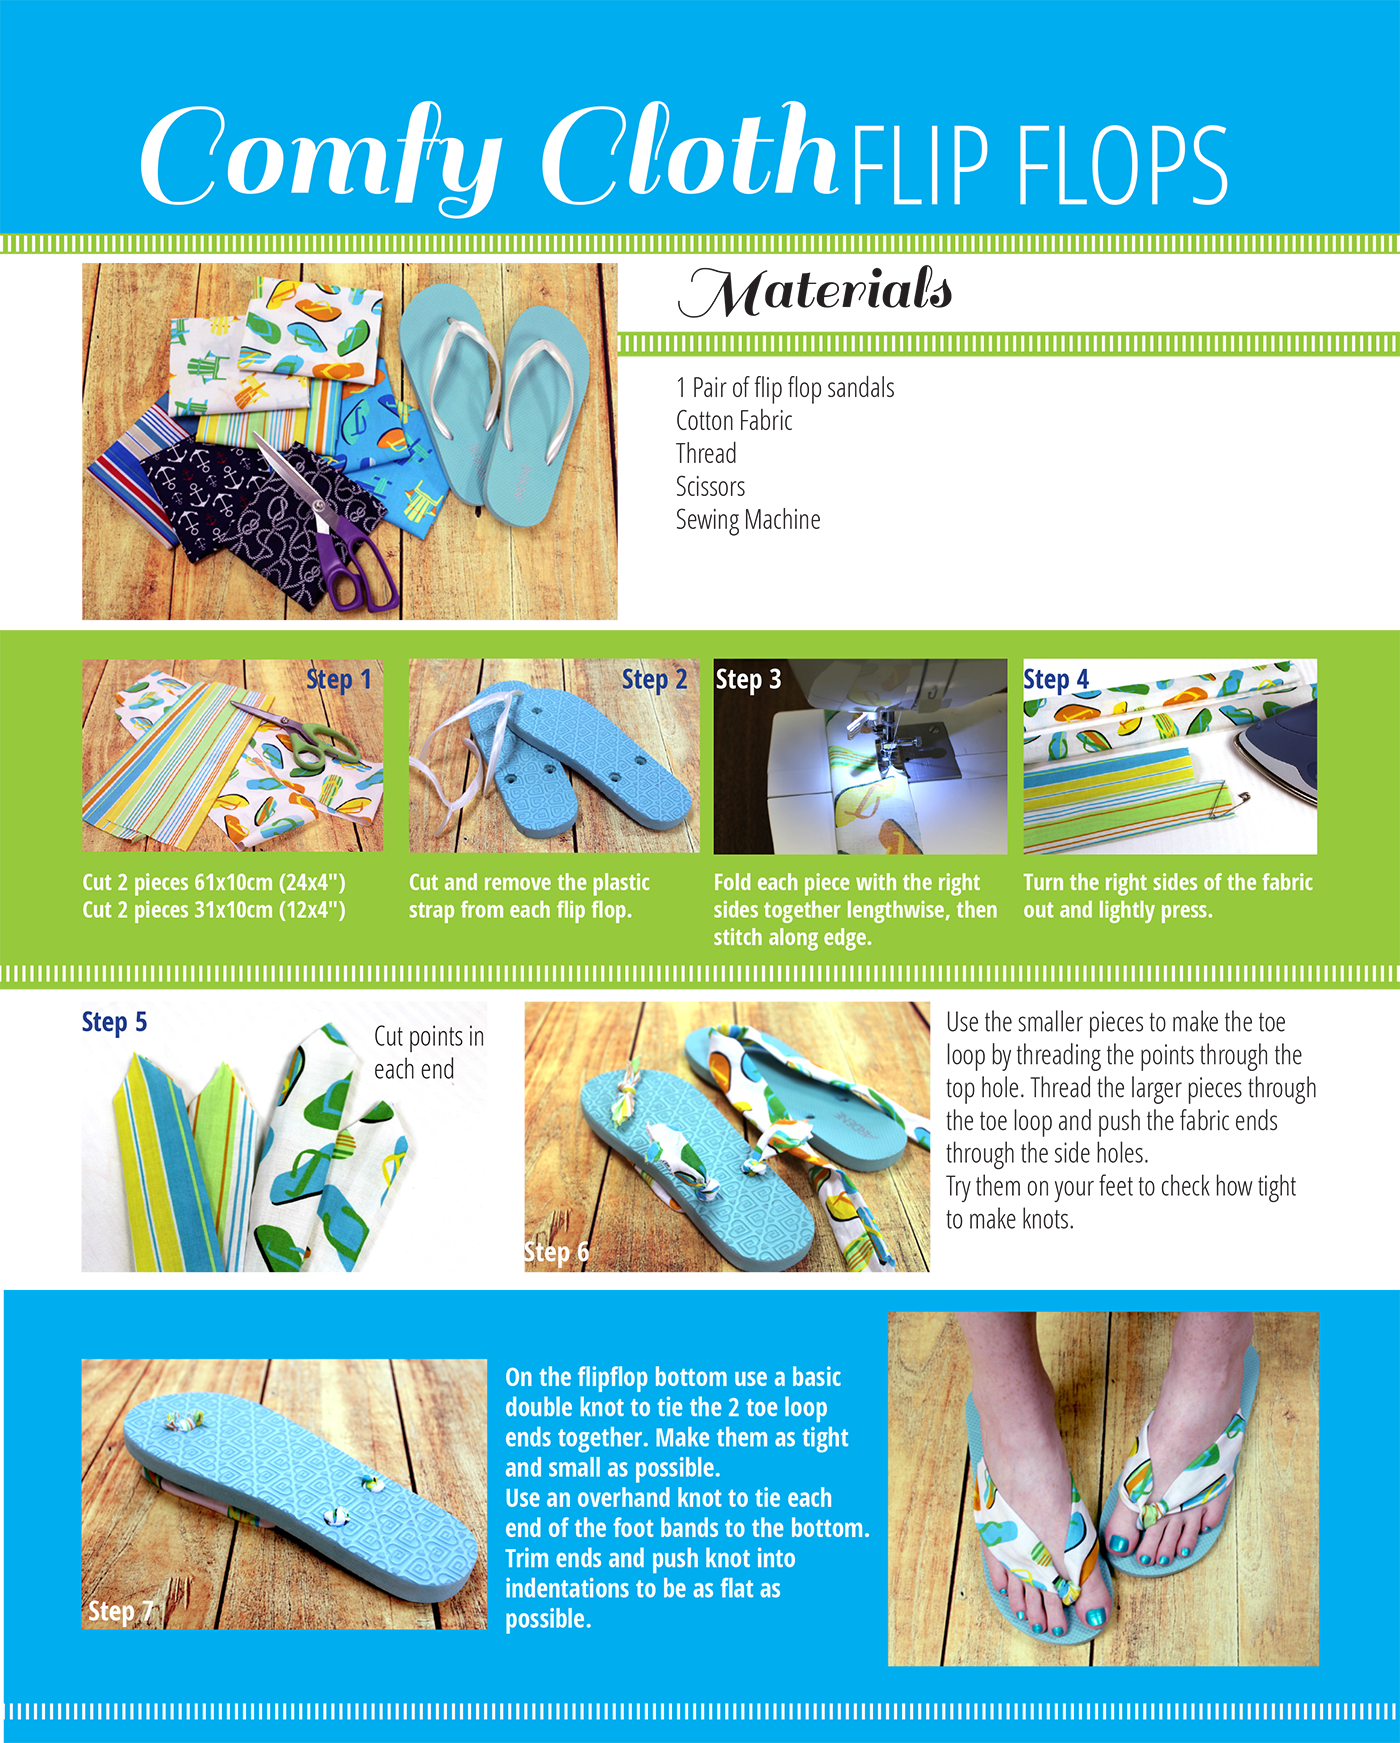 Materials & steps to create comfy cloth flip flops